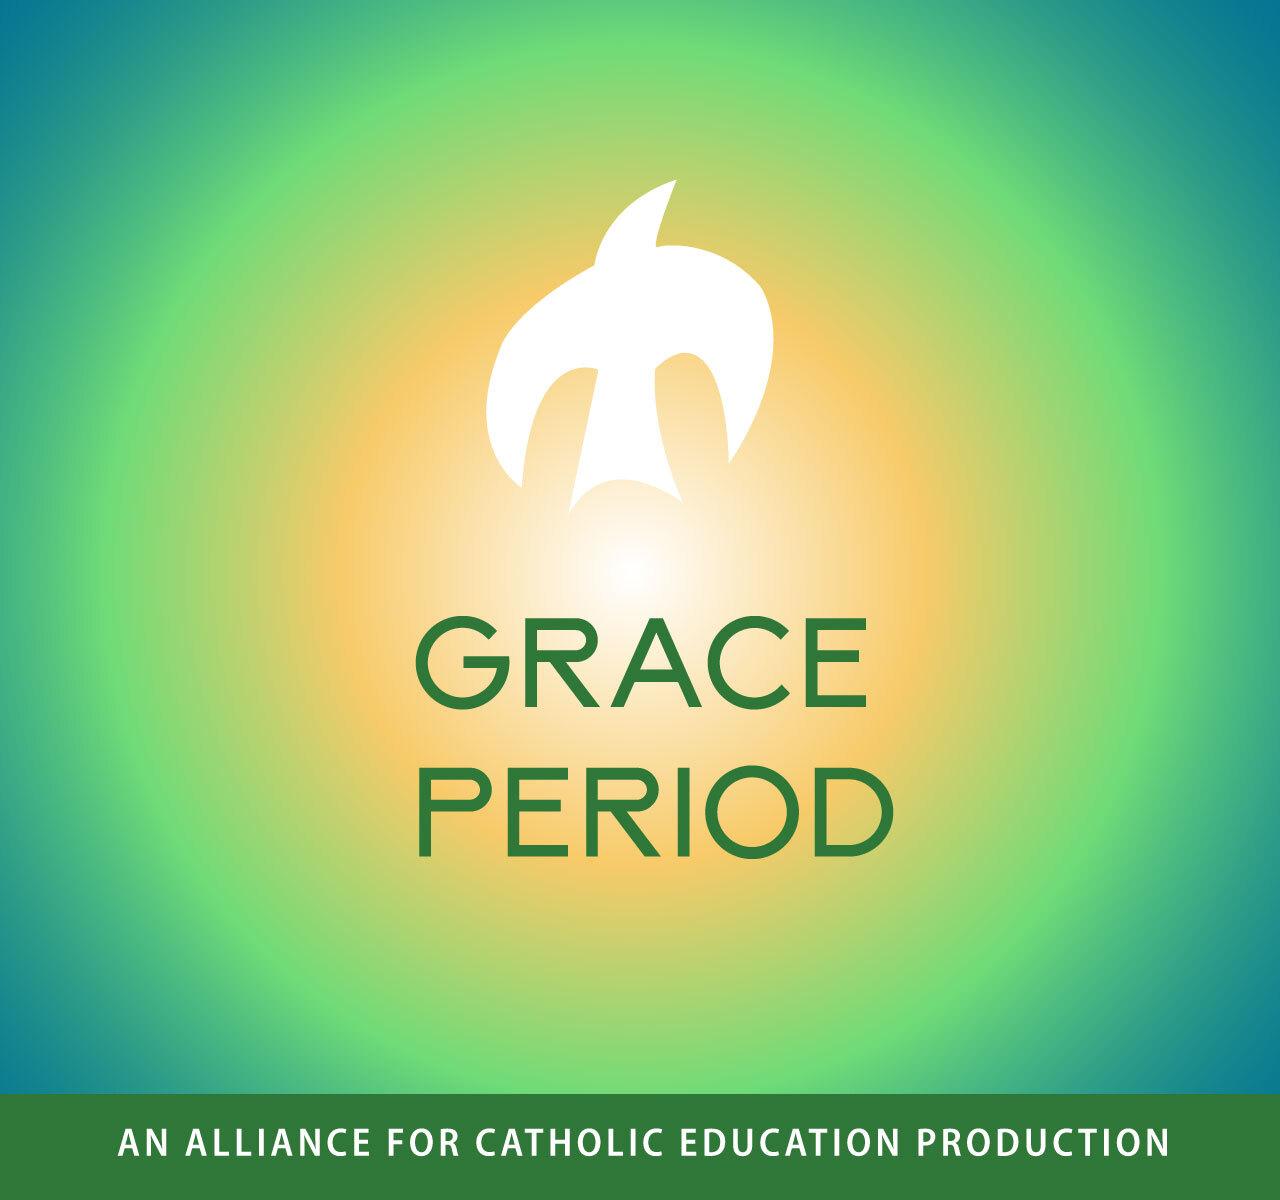 Grace period image